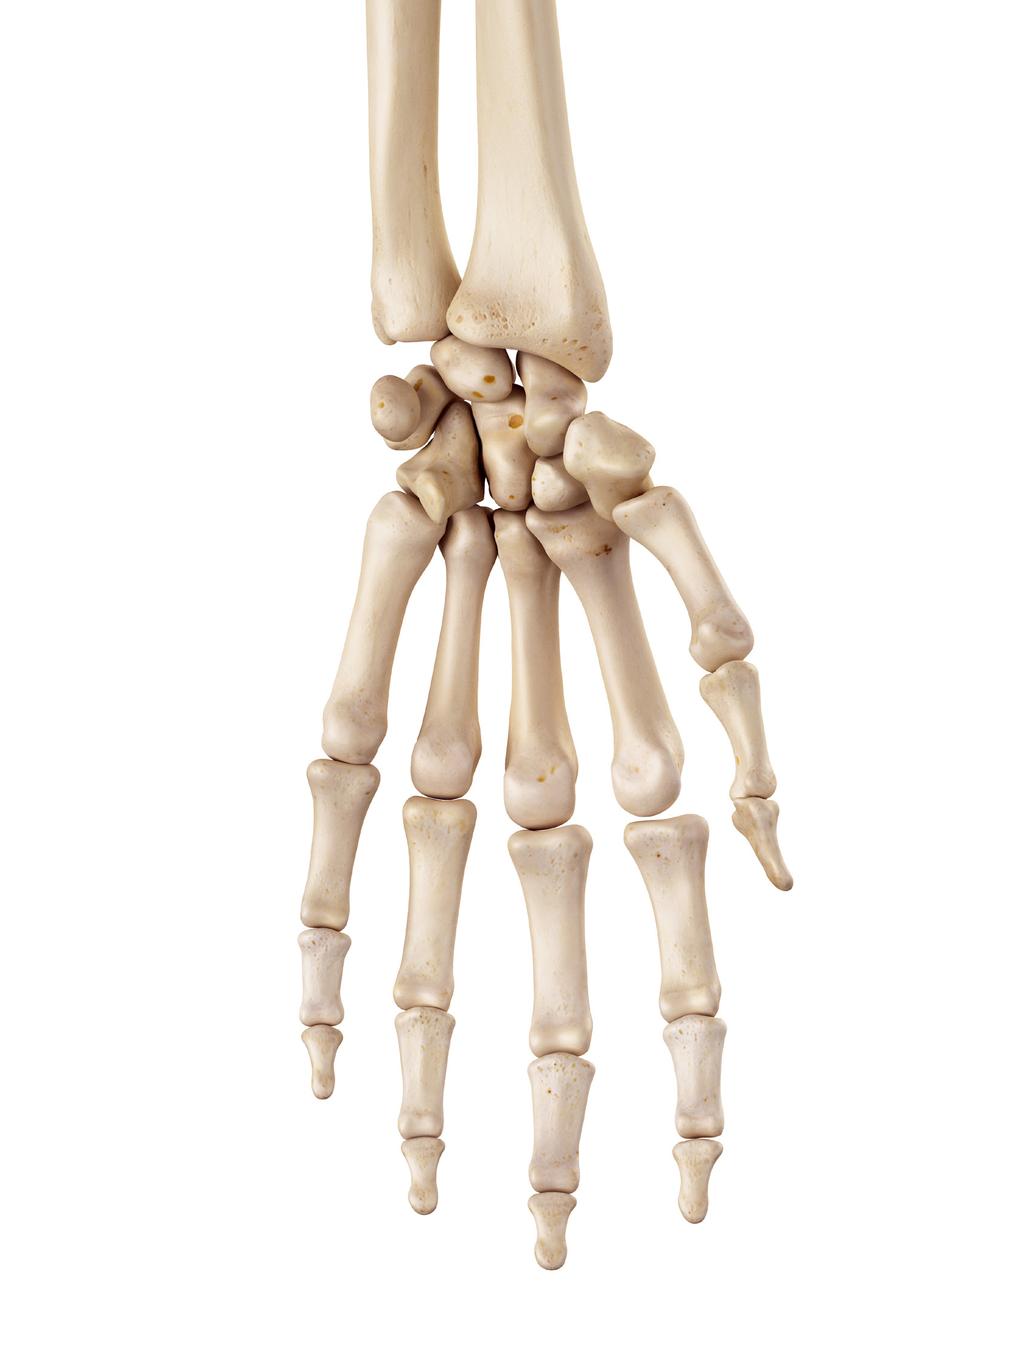 Hand and Wrist Solutions Arthroplasty